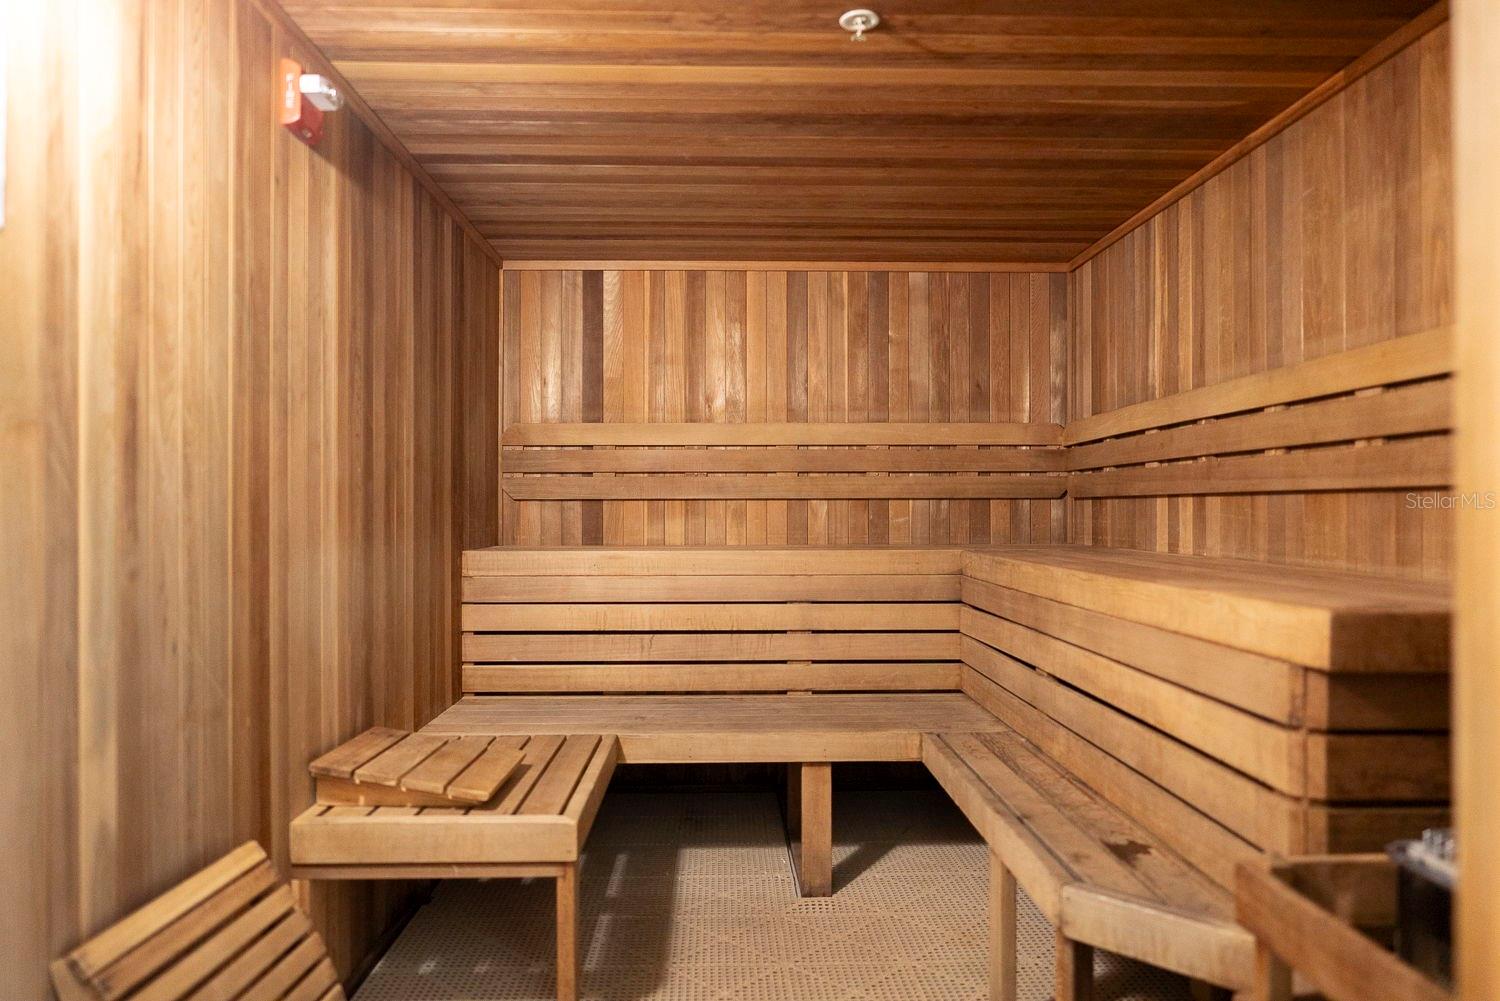 A look inside the sauna.